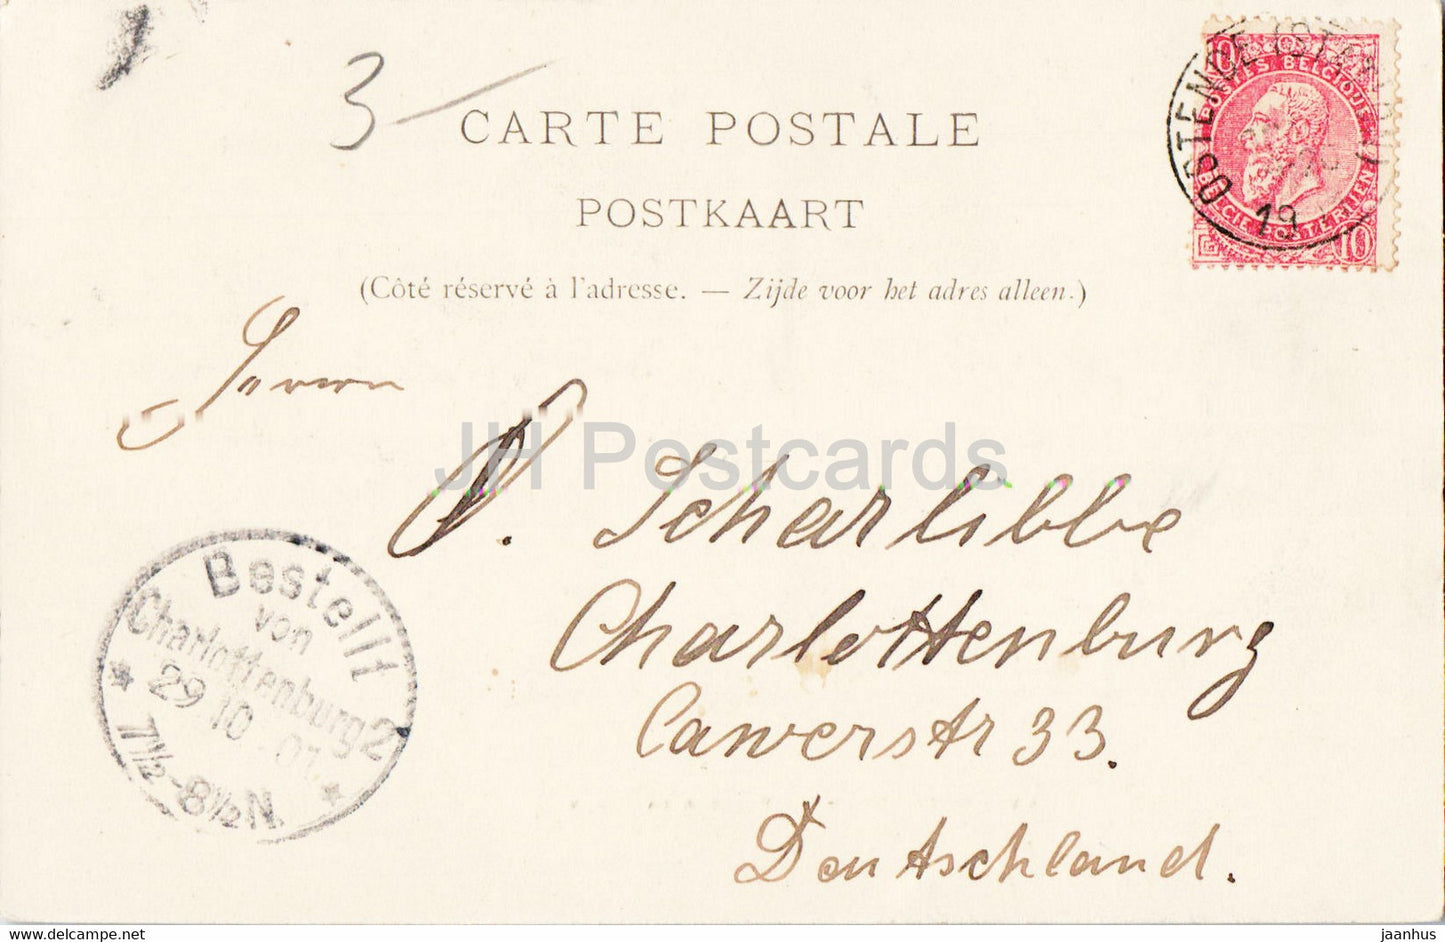 Ostende - Oostende - La Plage & La Digue - 44 - old postcard - 1901 - Belgium - used